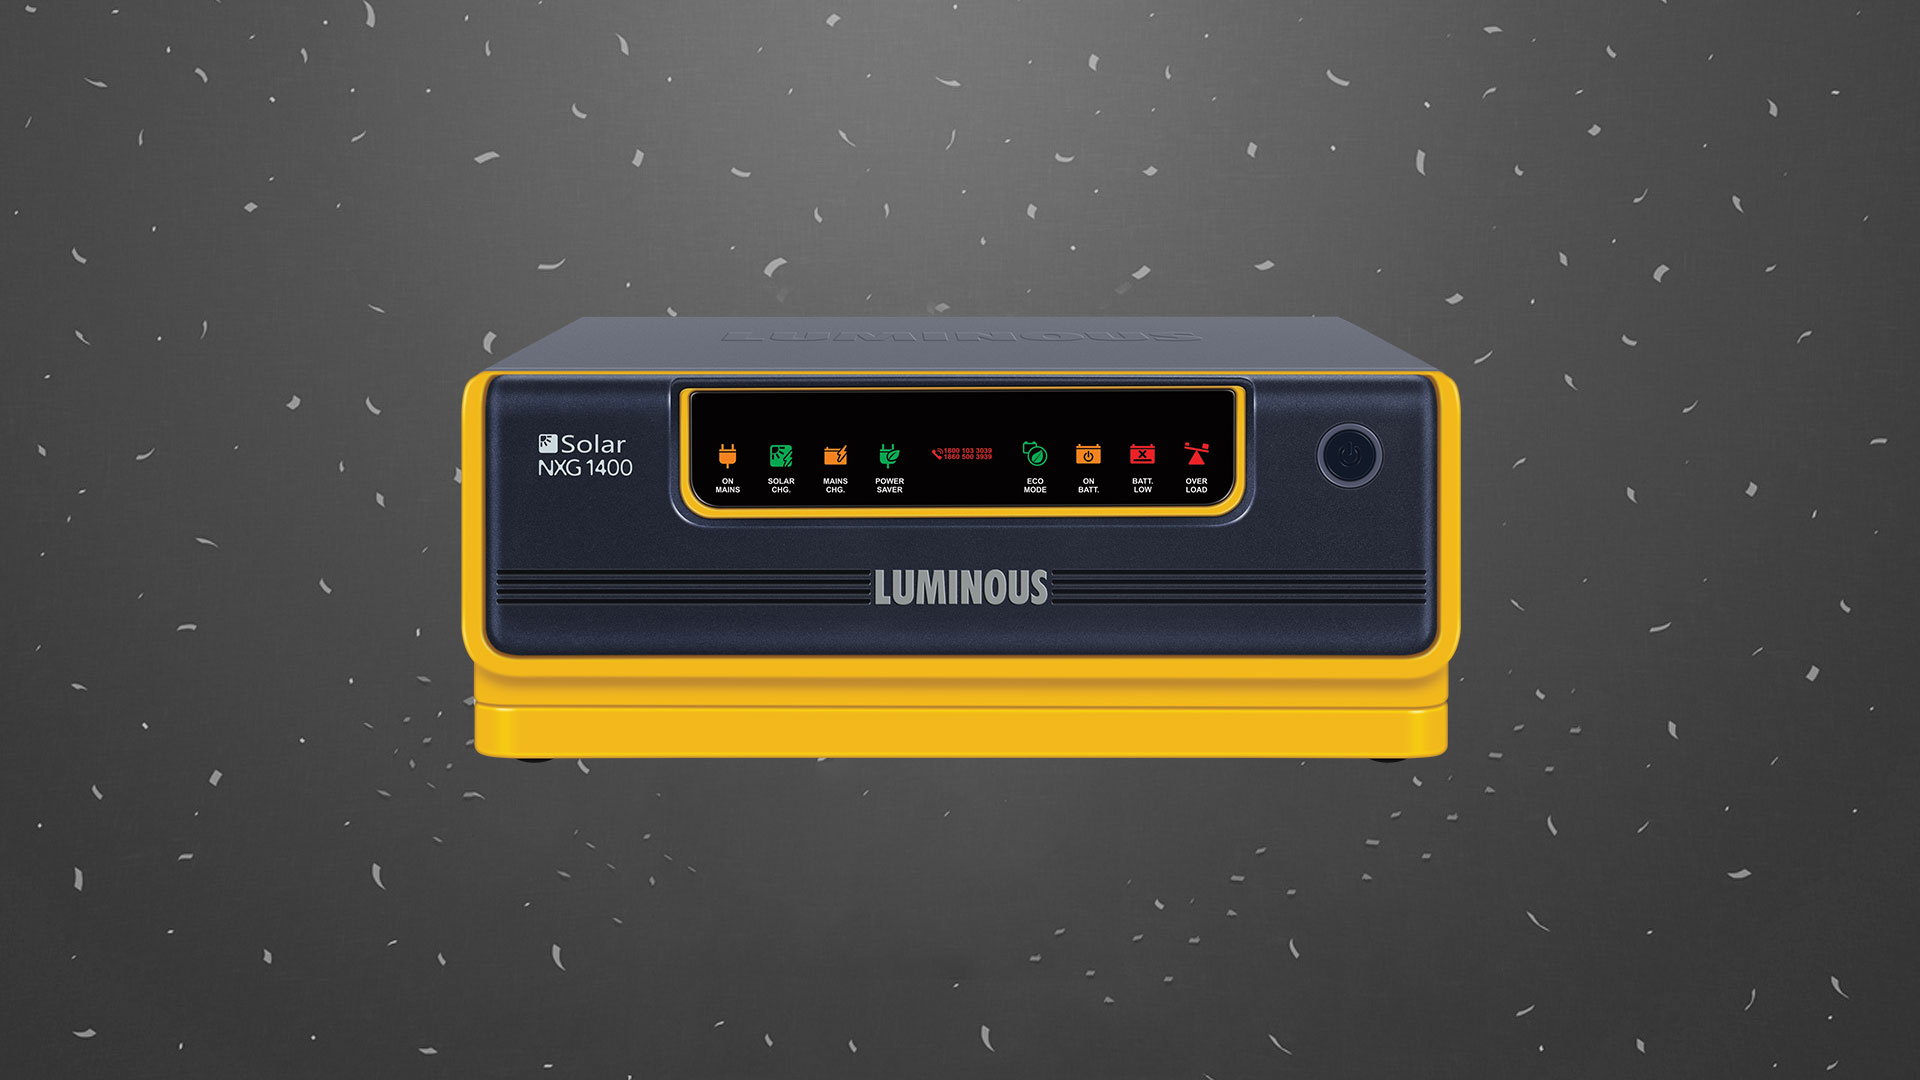 Luminous Solar NXG 1400 Inverter UPS Review